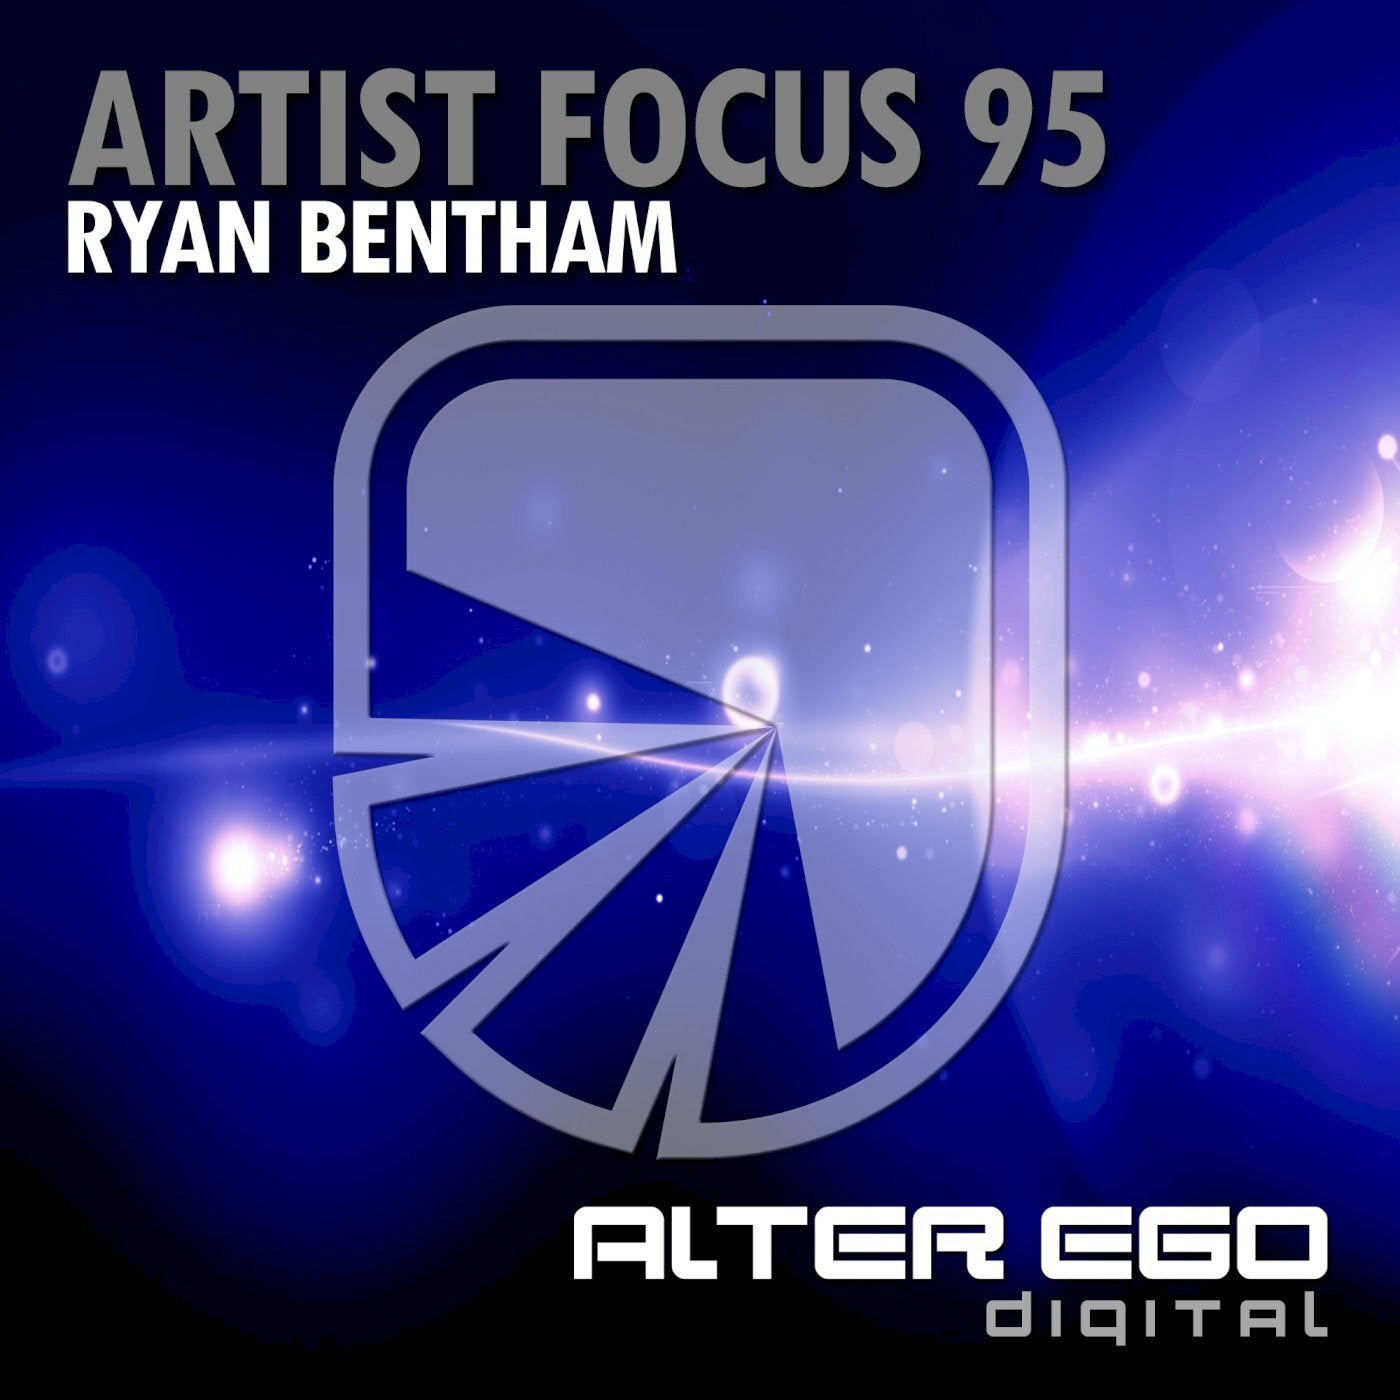 Artist Focus 95 - Ryan Bentham